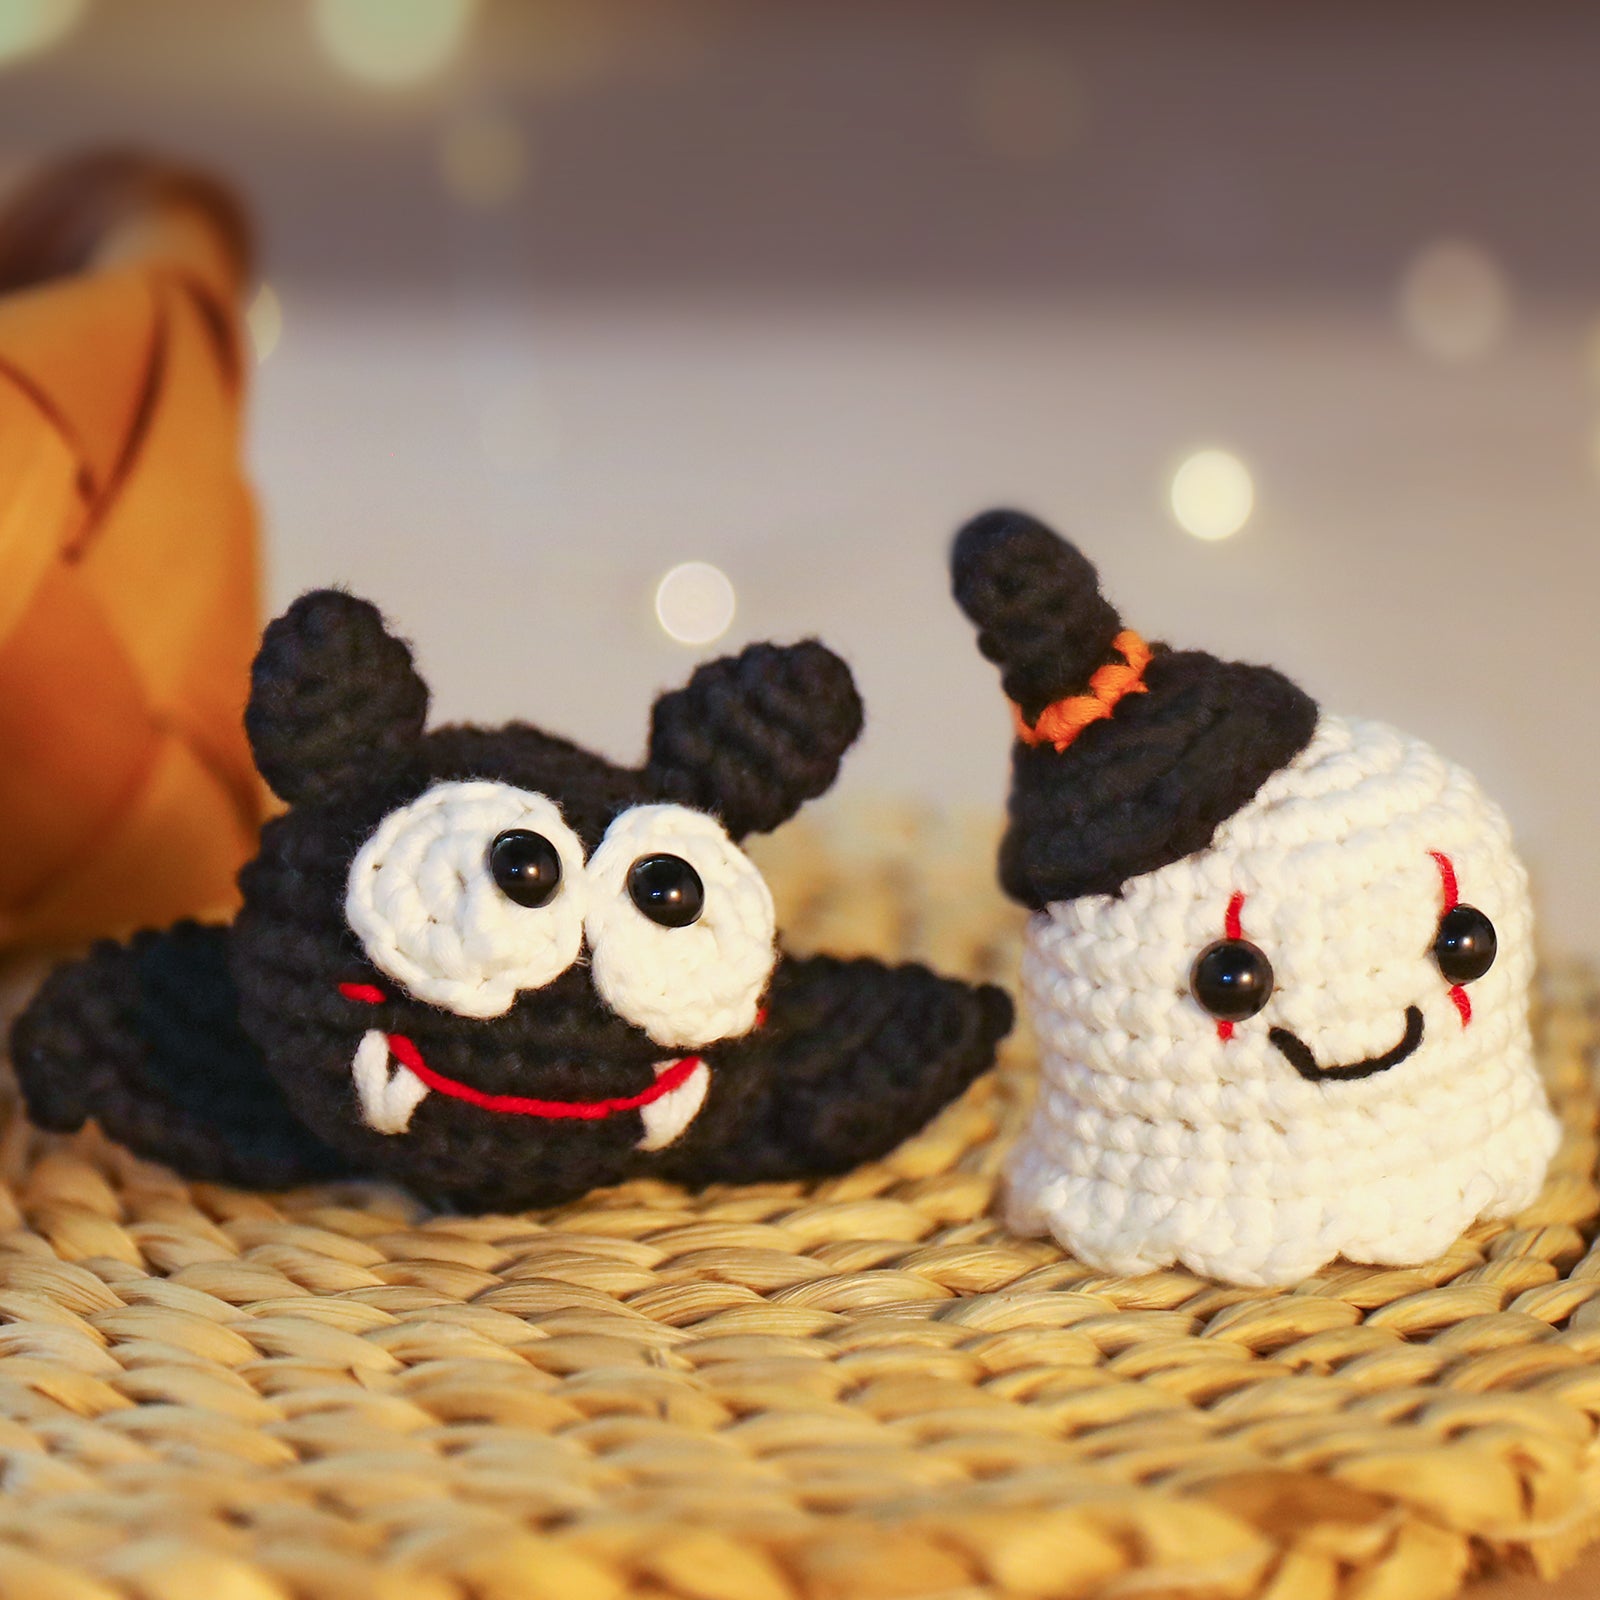 Mewaii® Crochet Axolotl Crochet Kit for Beginners with Easy Peasy Yarn